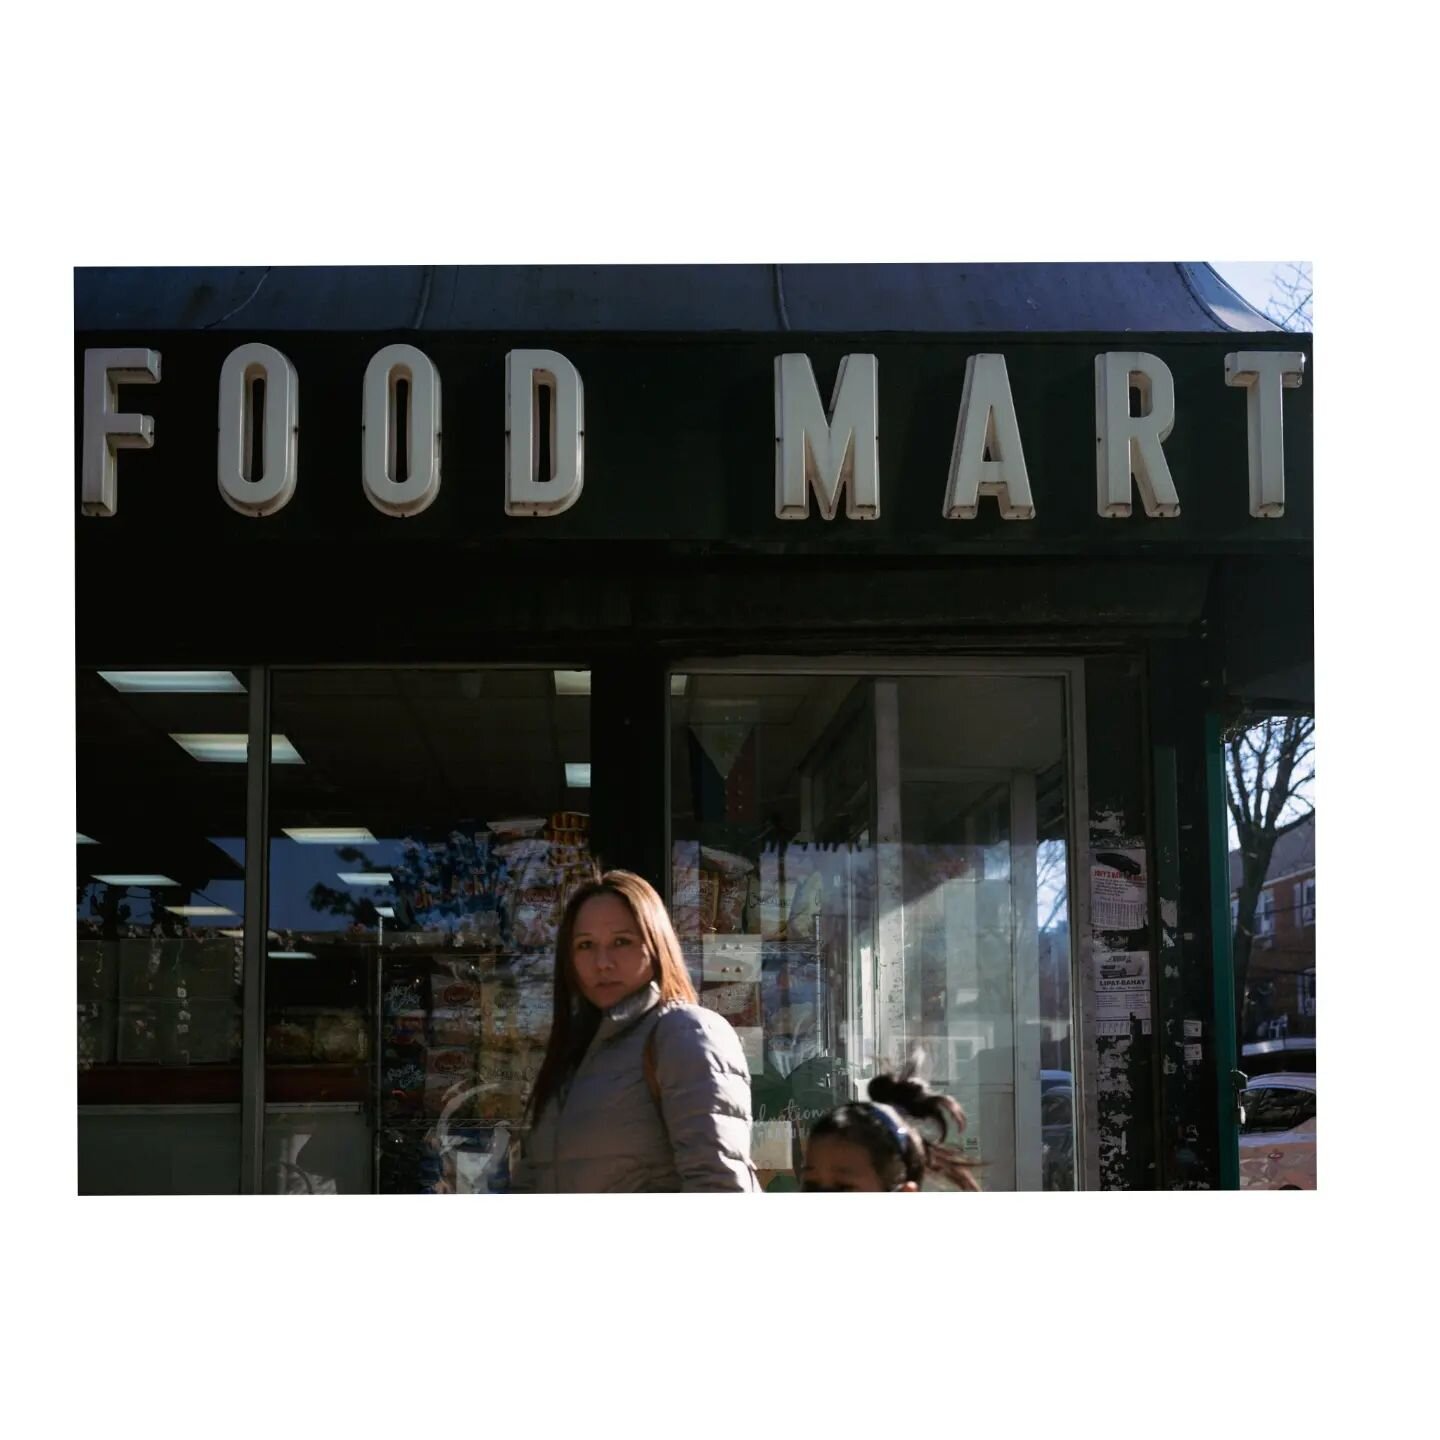 Phil-am Food Mart. 2.21.22